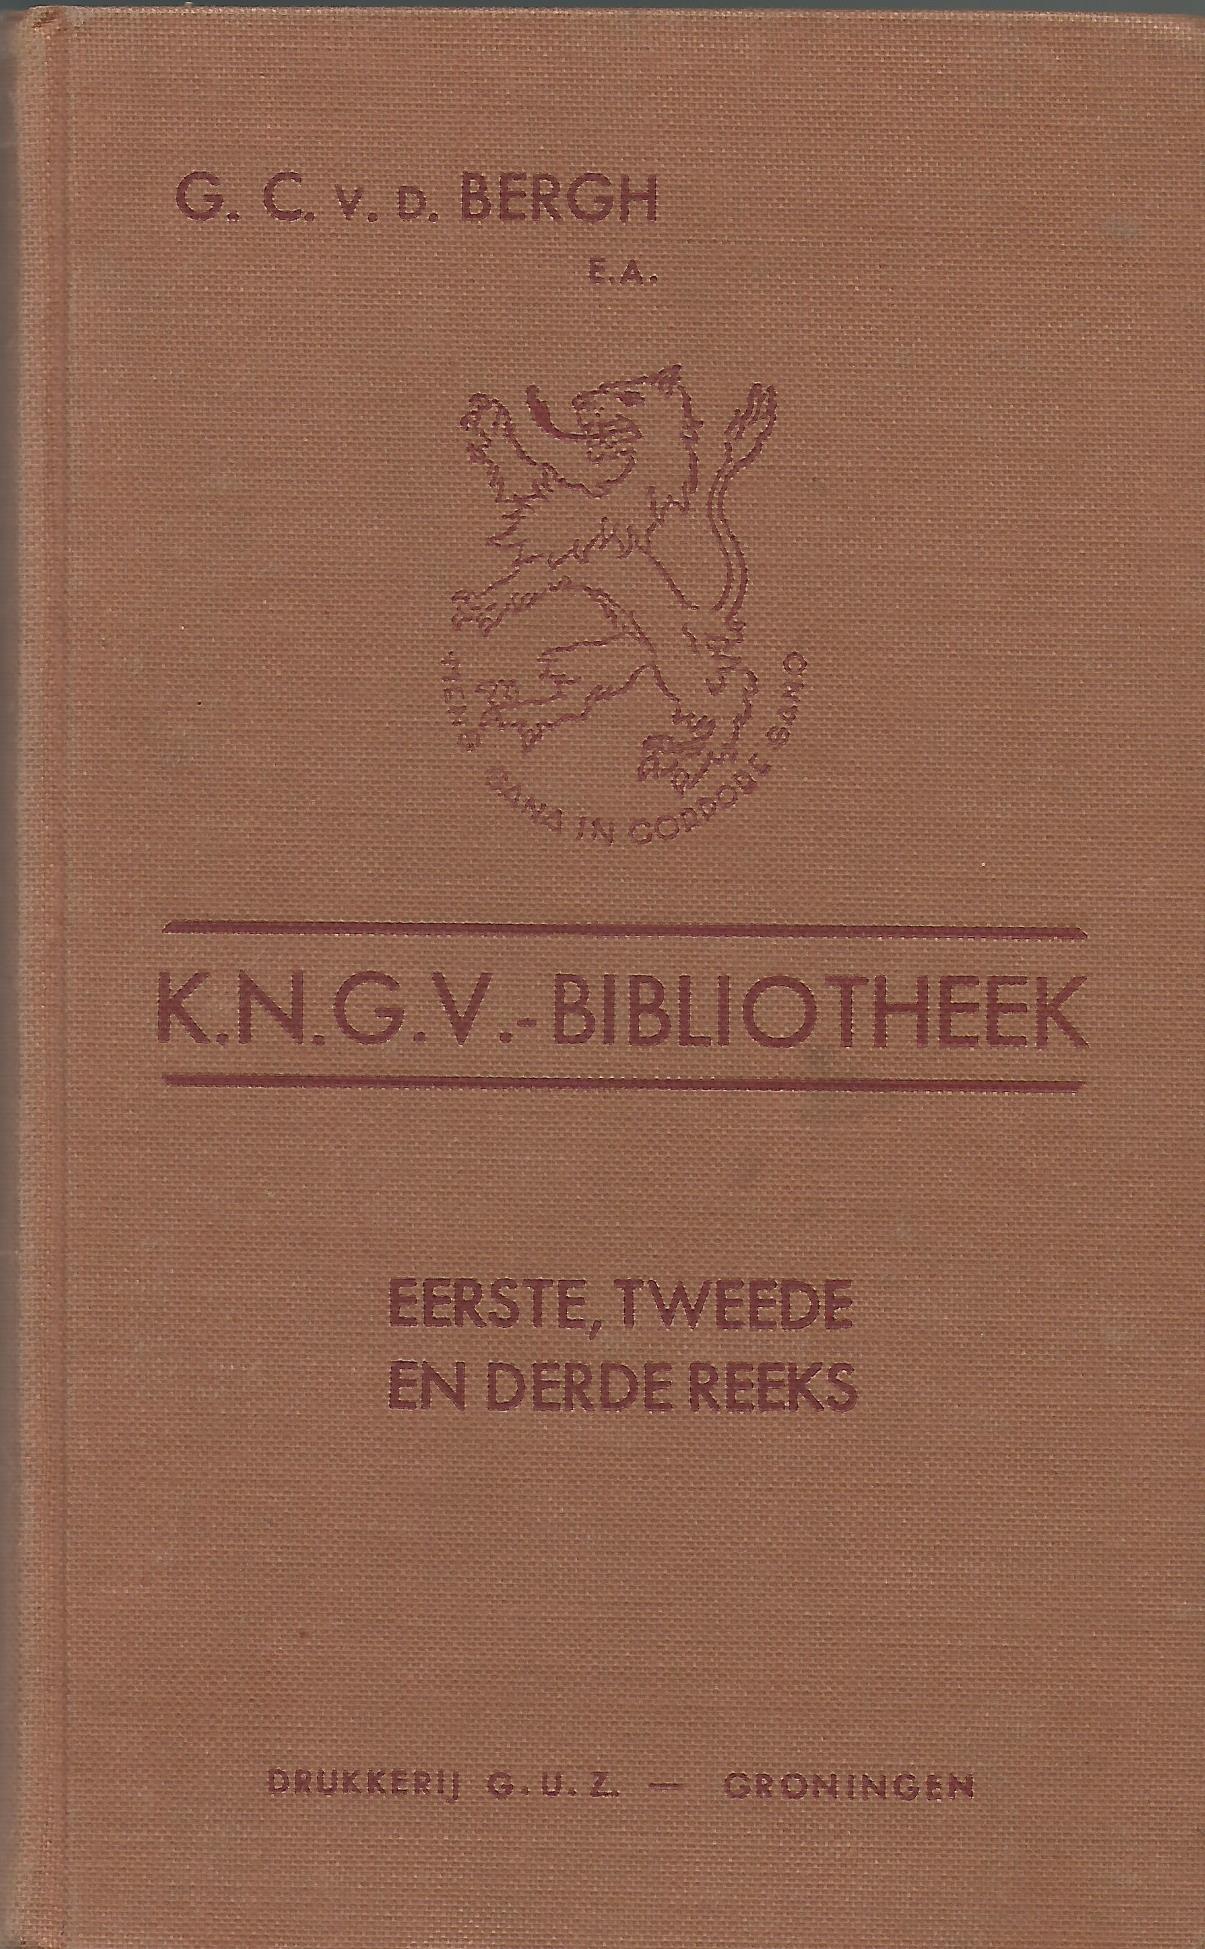 Bergh, G.C. van den, E.A. - K.N.G.V. Bibliotheek Eerste, tweede en derde reeks